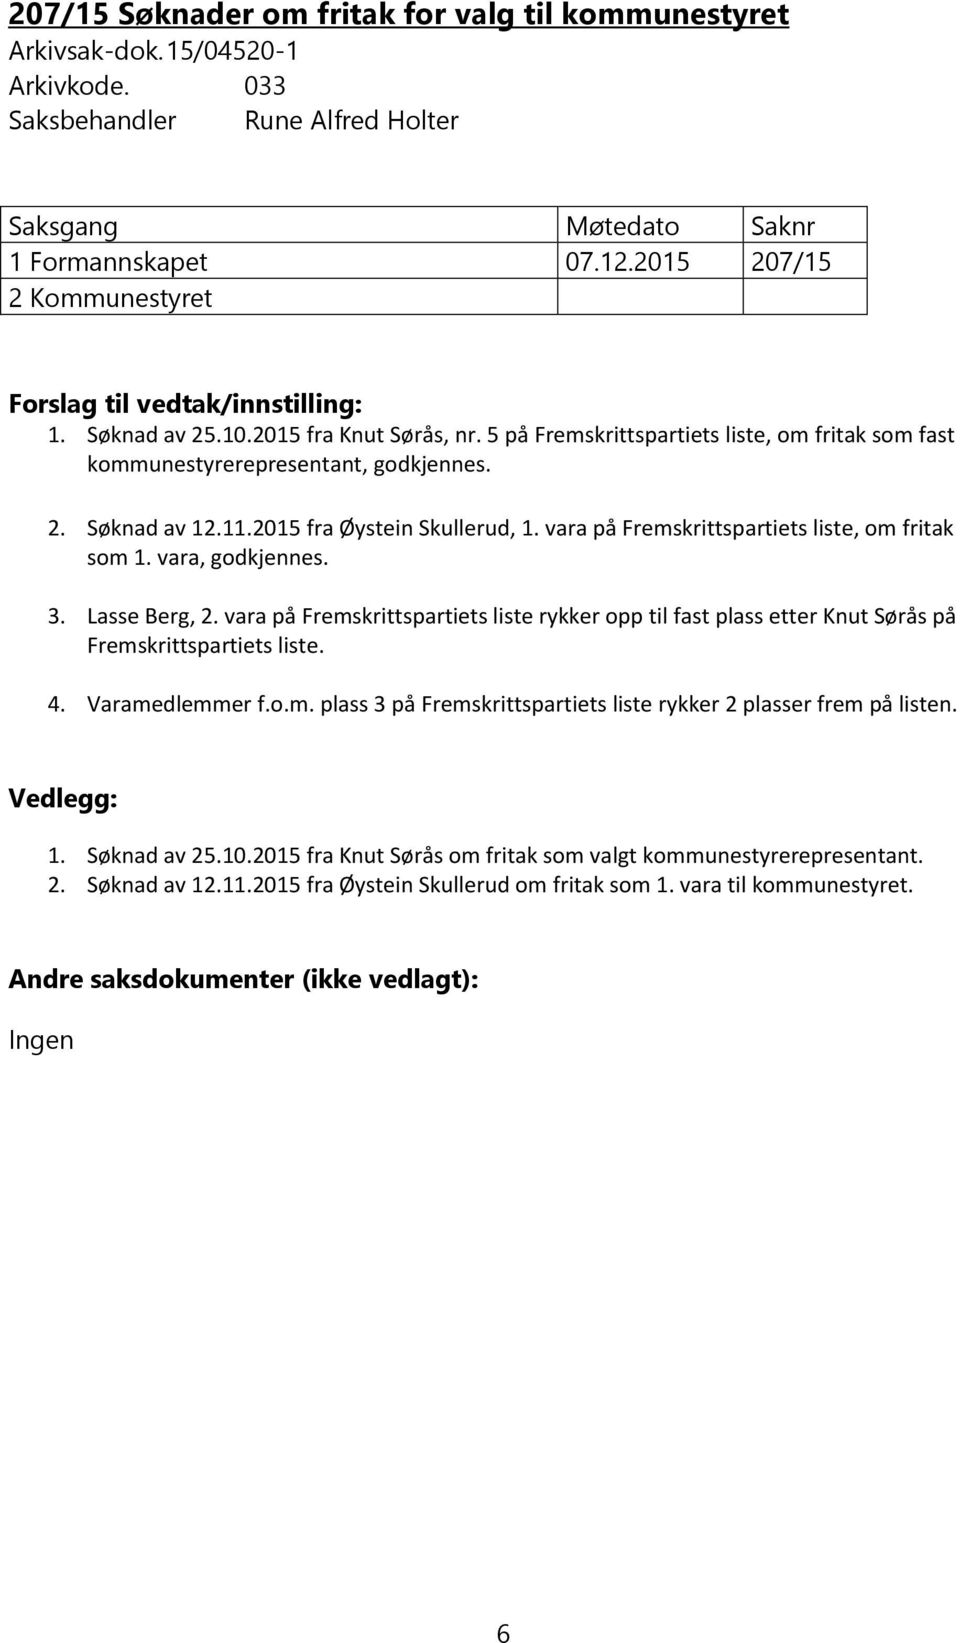 11.2015 fra Øystein Skullerud, 1. vara på Fremskrittspartiets liste, om fritak som 1. vara, godkjennes. 3. Lasse Berg, 2.